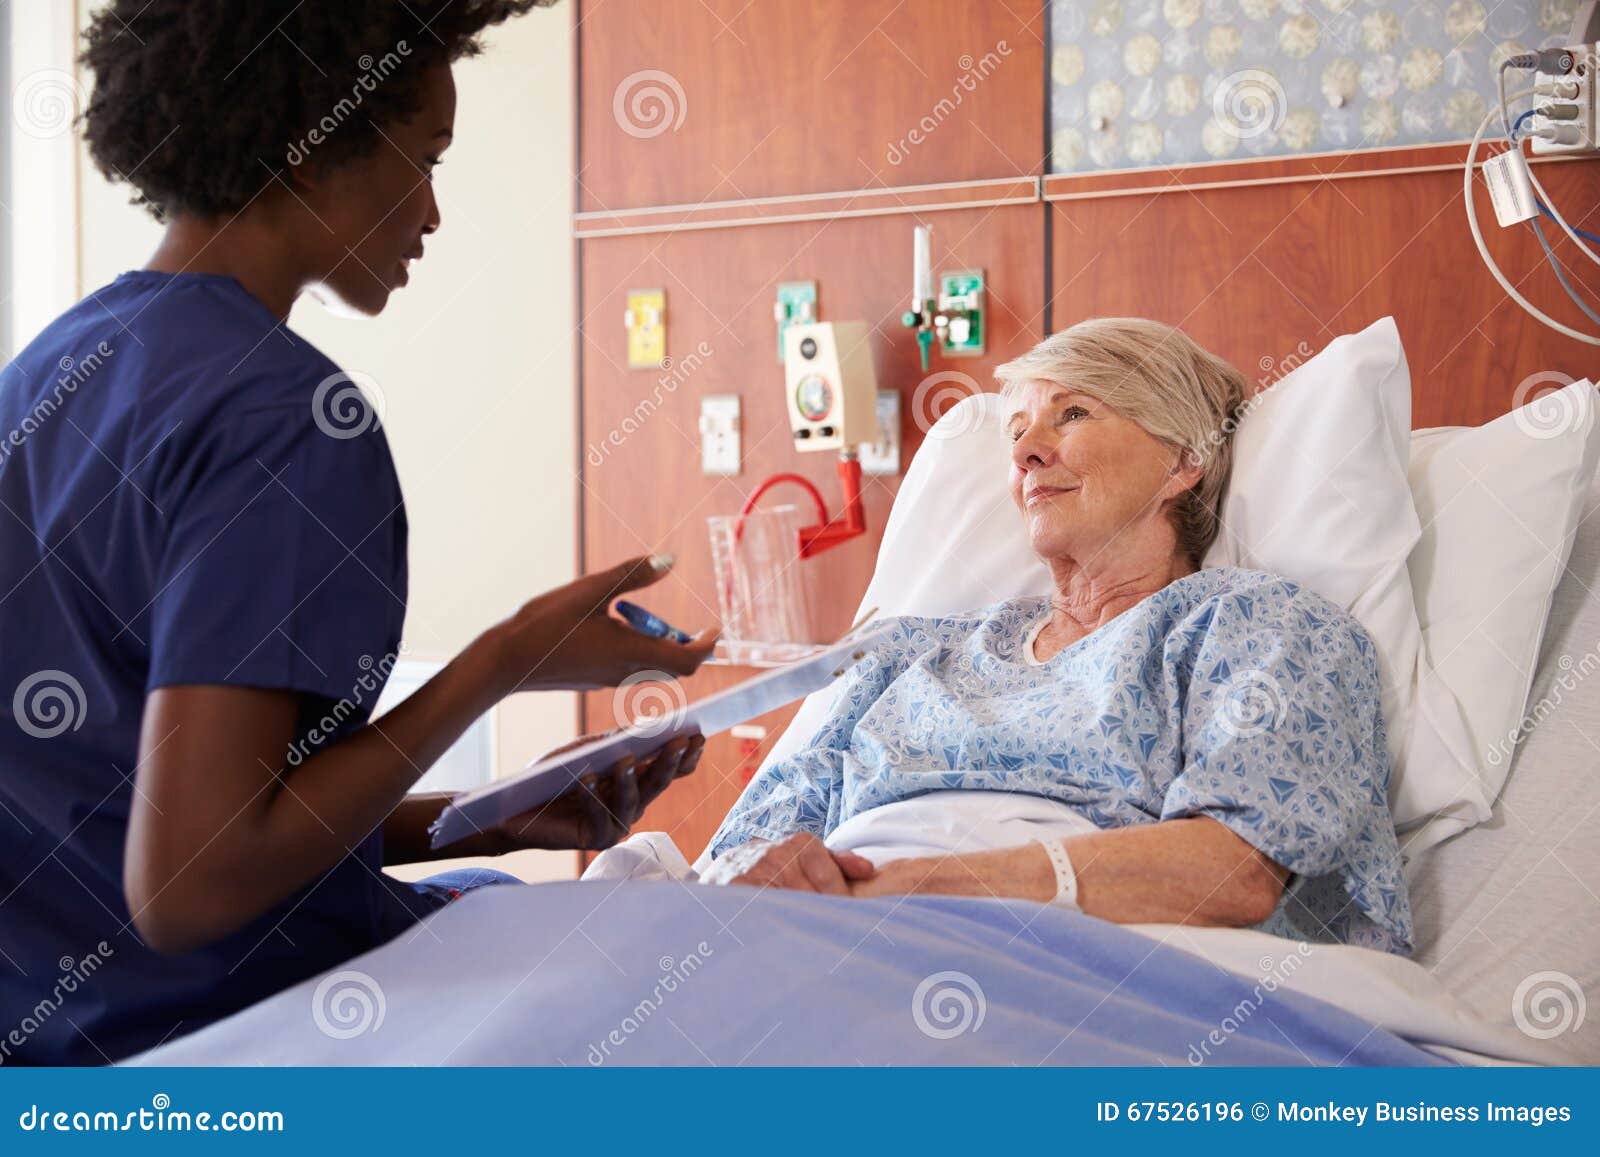 nurse talking to senior female patient in hospital bed